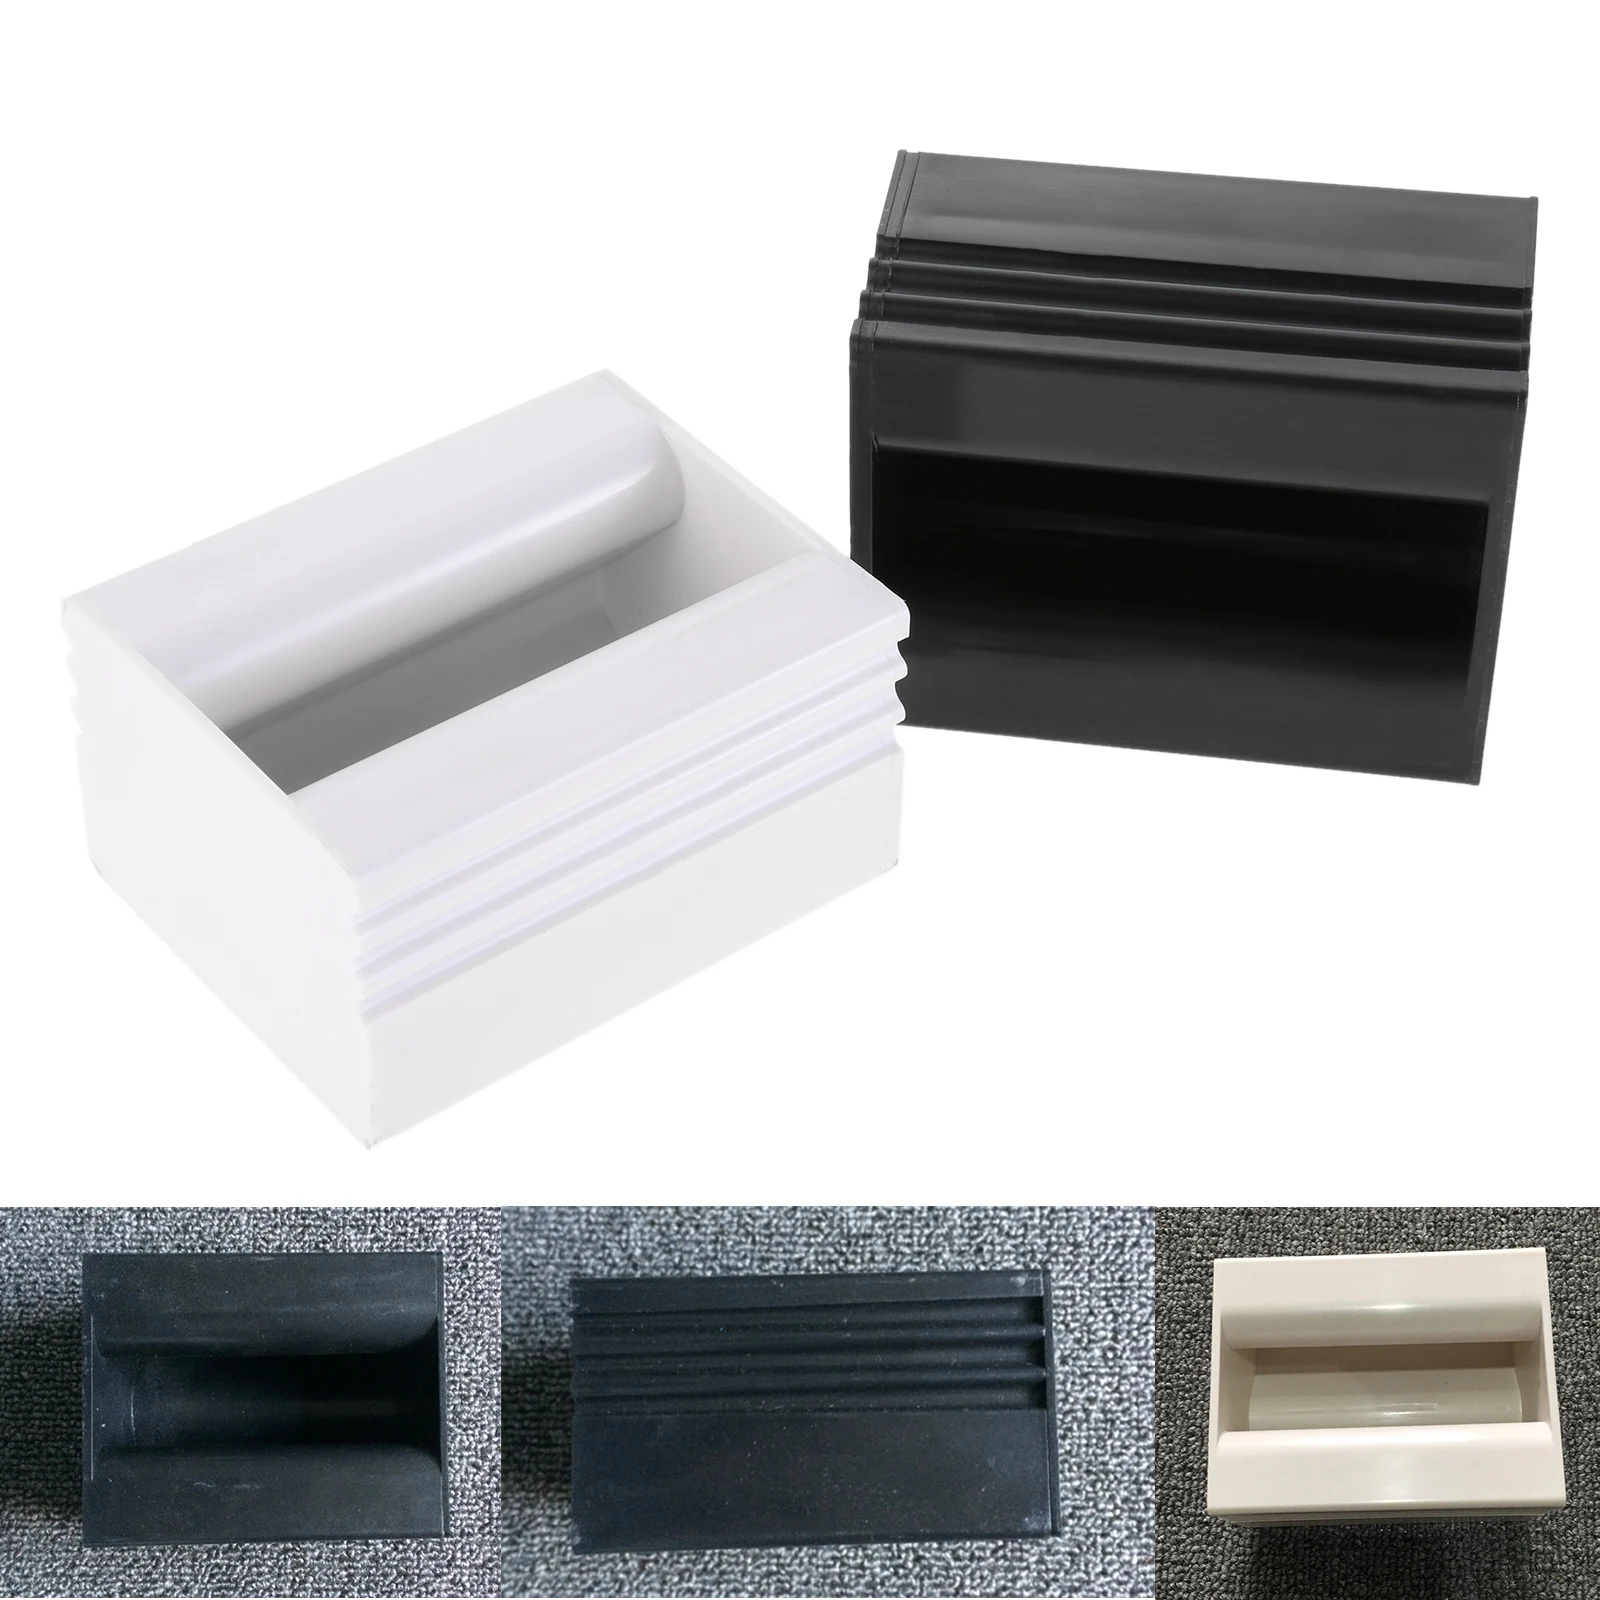 PVC שחור פלסטיק באיכות גבוהה גלשן SUP לוח ידית חדש עיצוב לעמוד ההנעה לוח חכם ידית ידיות 10.3x8.1x5.7cm